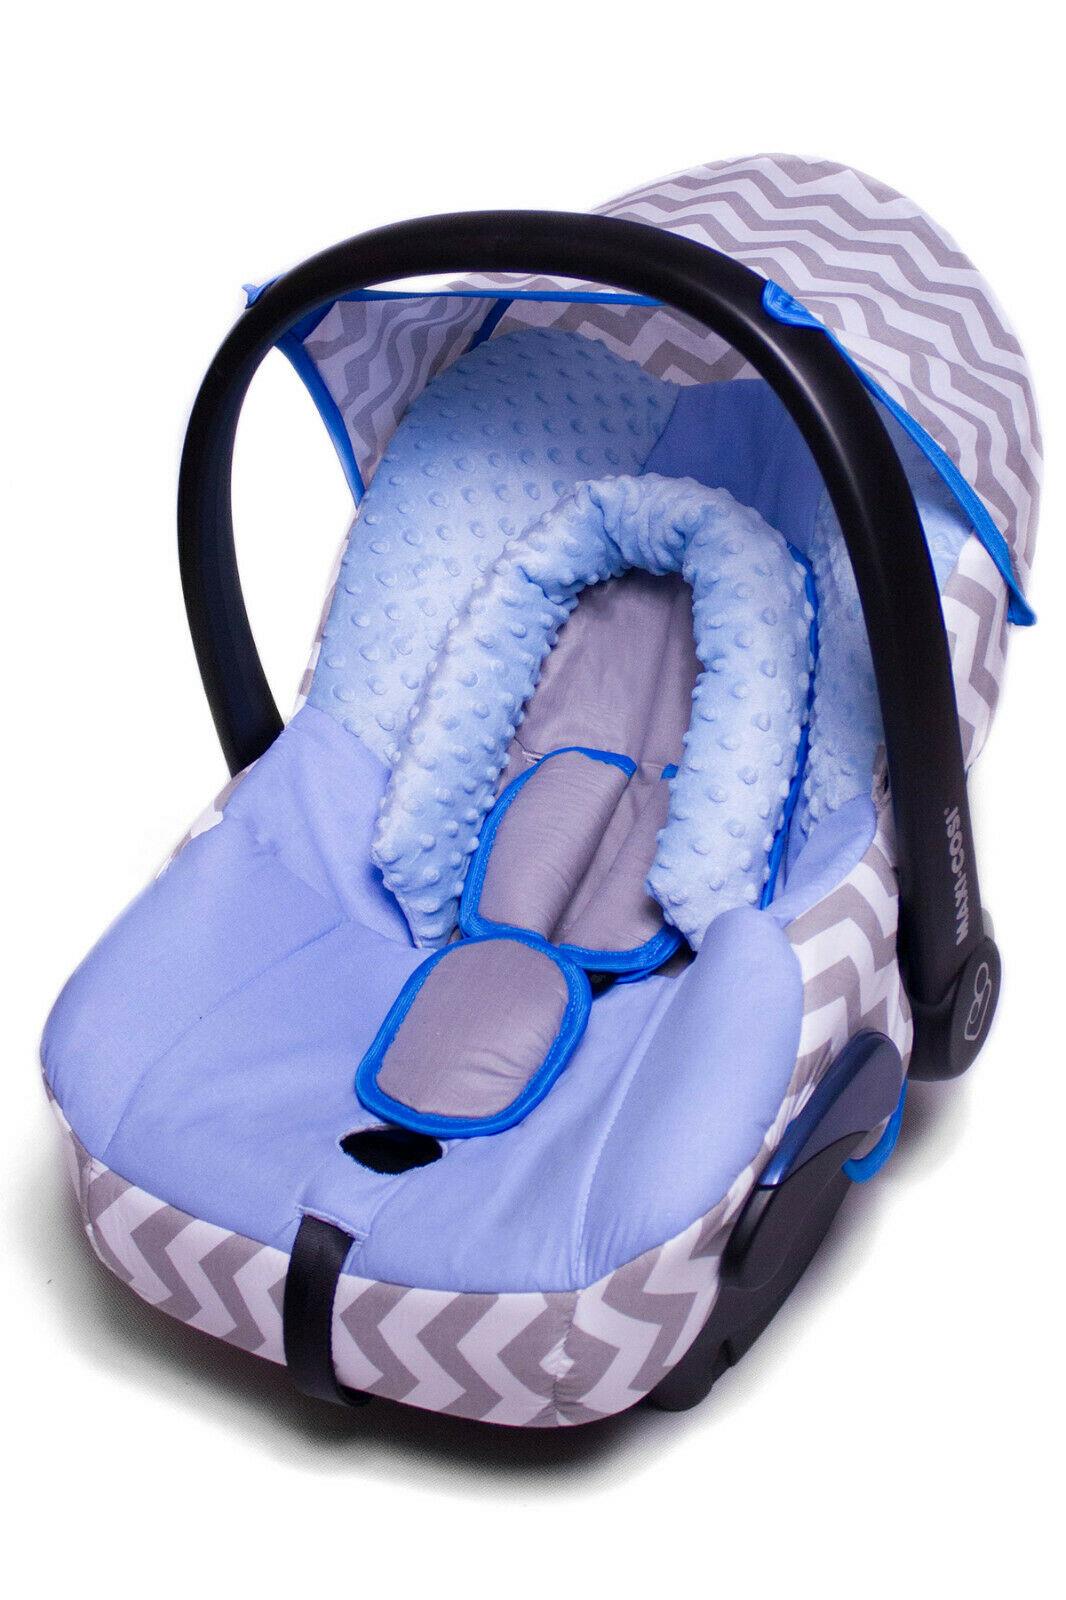 Full Cover Set Fitting Maxi Cosi Cabriofix Baby Car Seat - Zig Zag / Blue